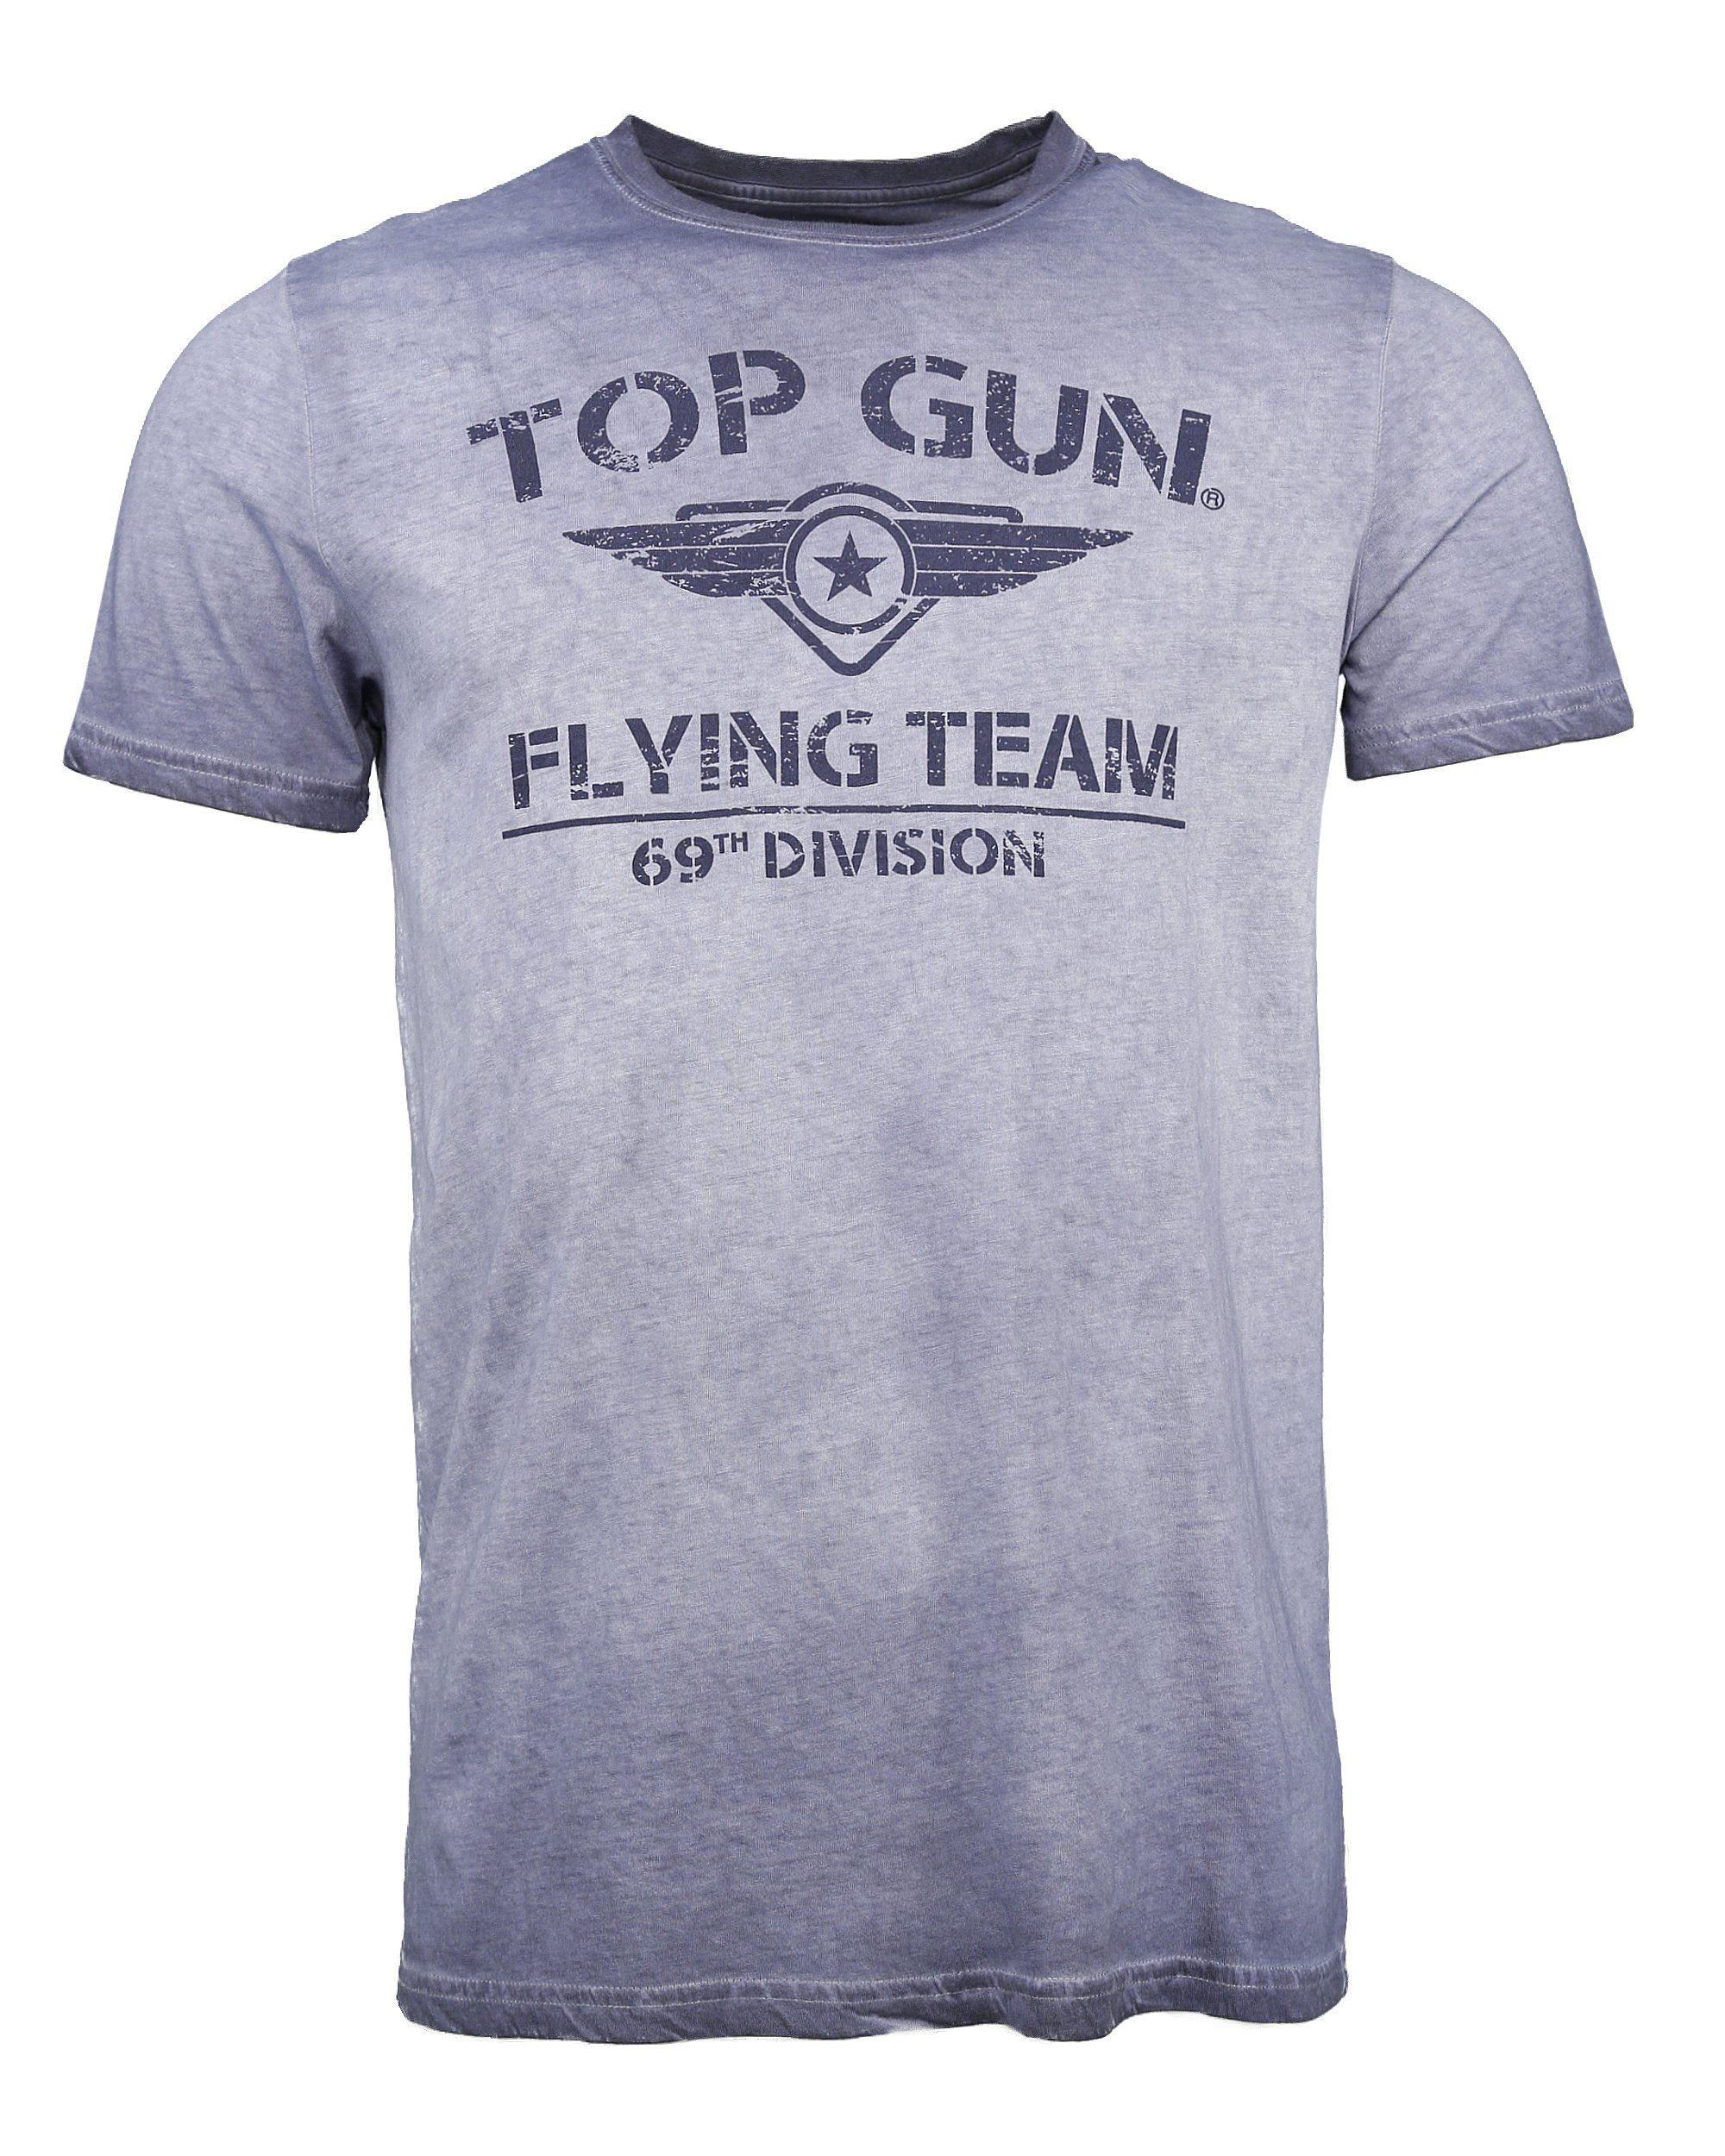 GUN TG20191041 Ease TOP navy T-Shirt